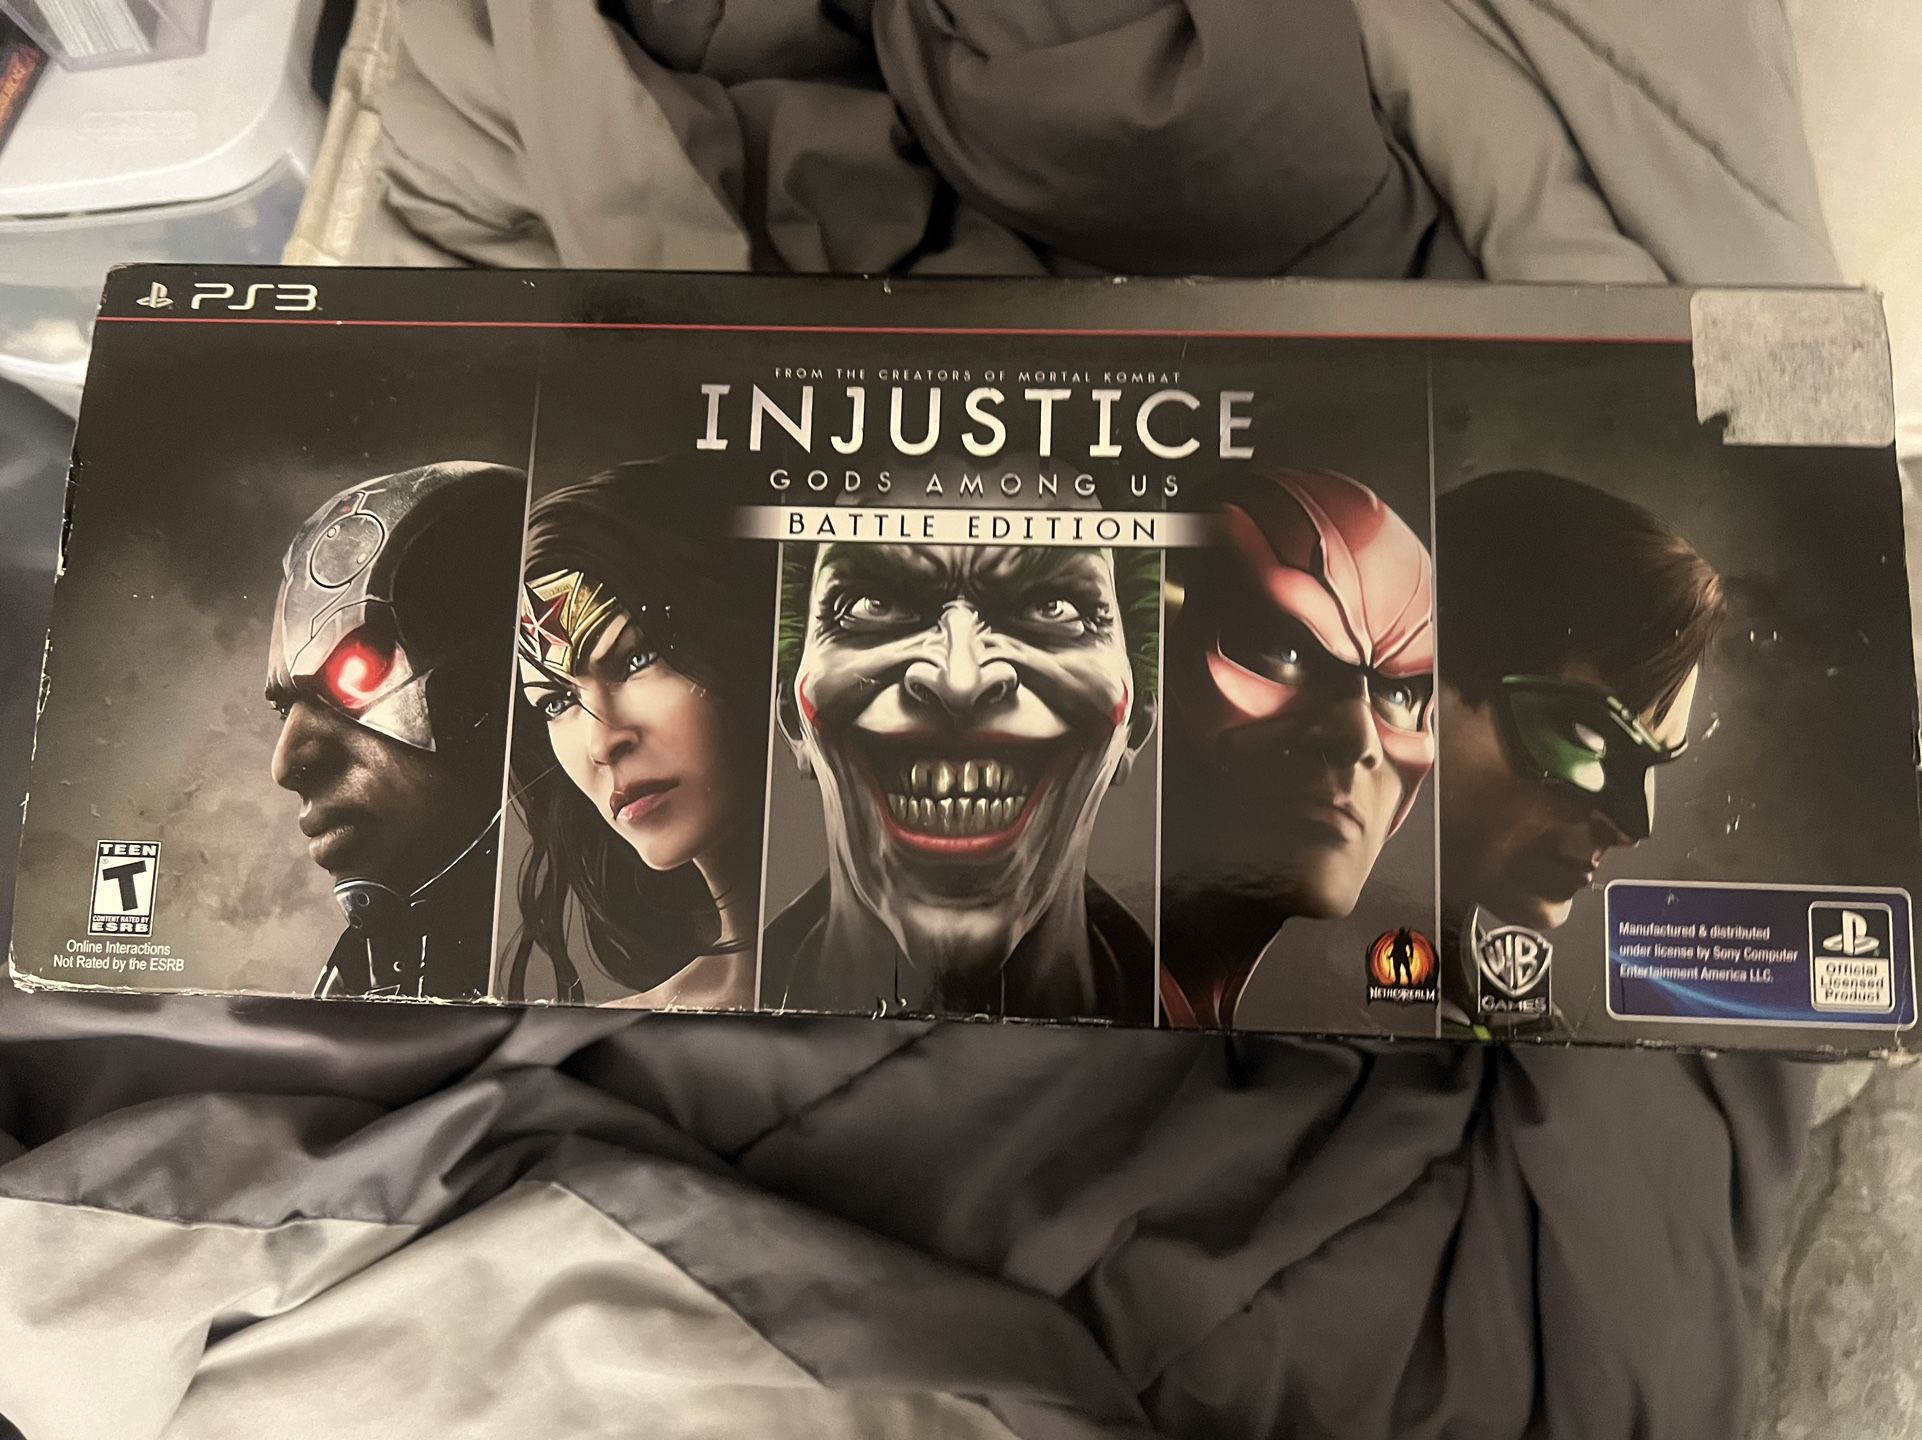 Injustice PS3 Arcade Controller Bundle( NOT A CONSOLE)